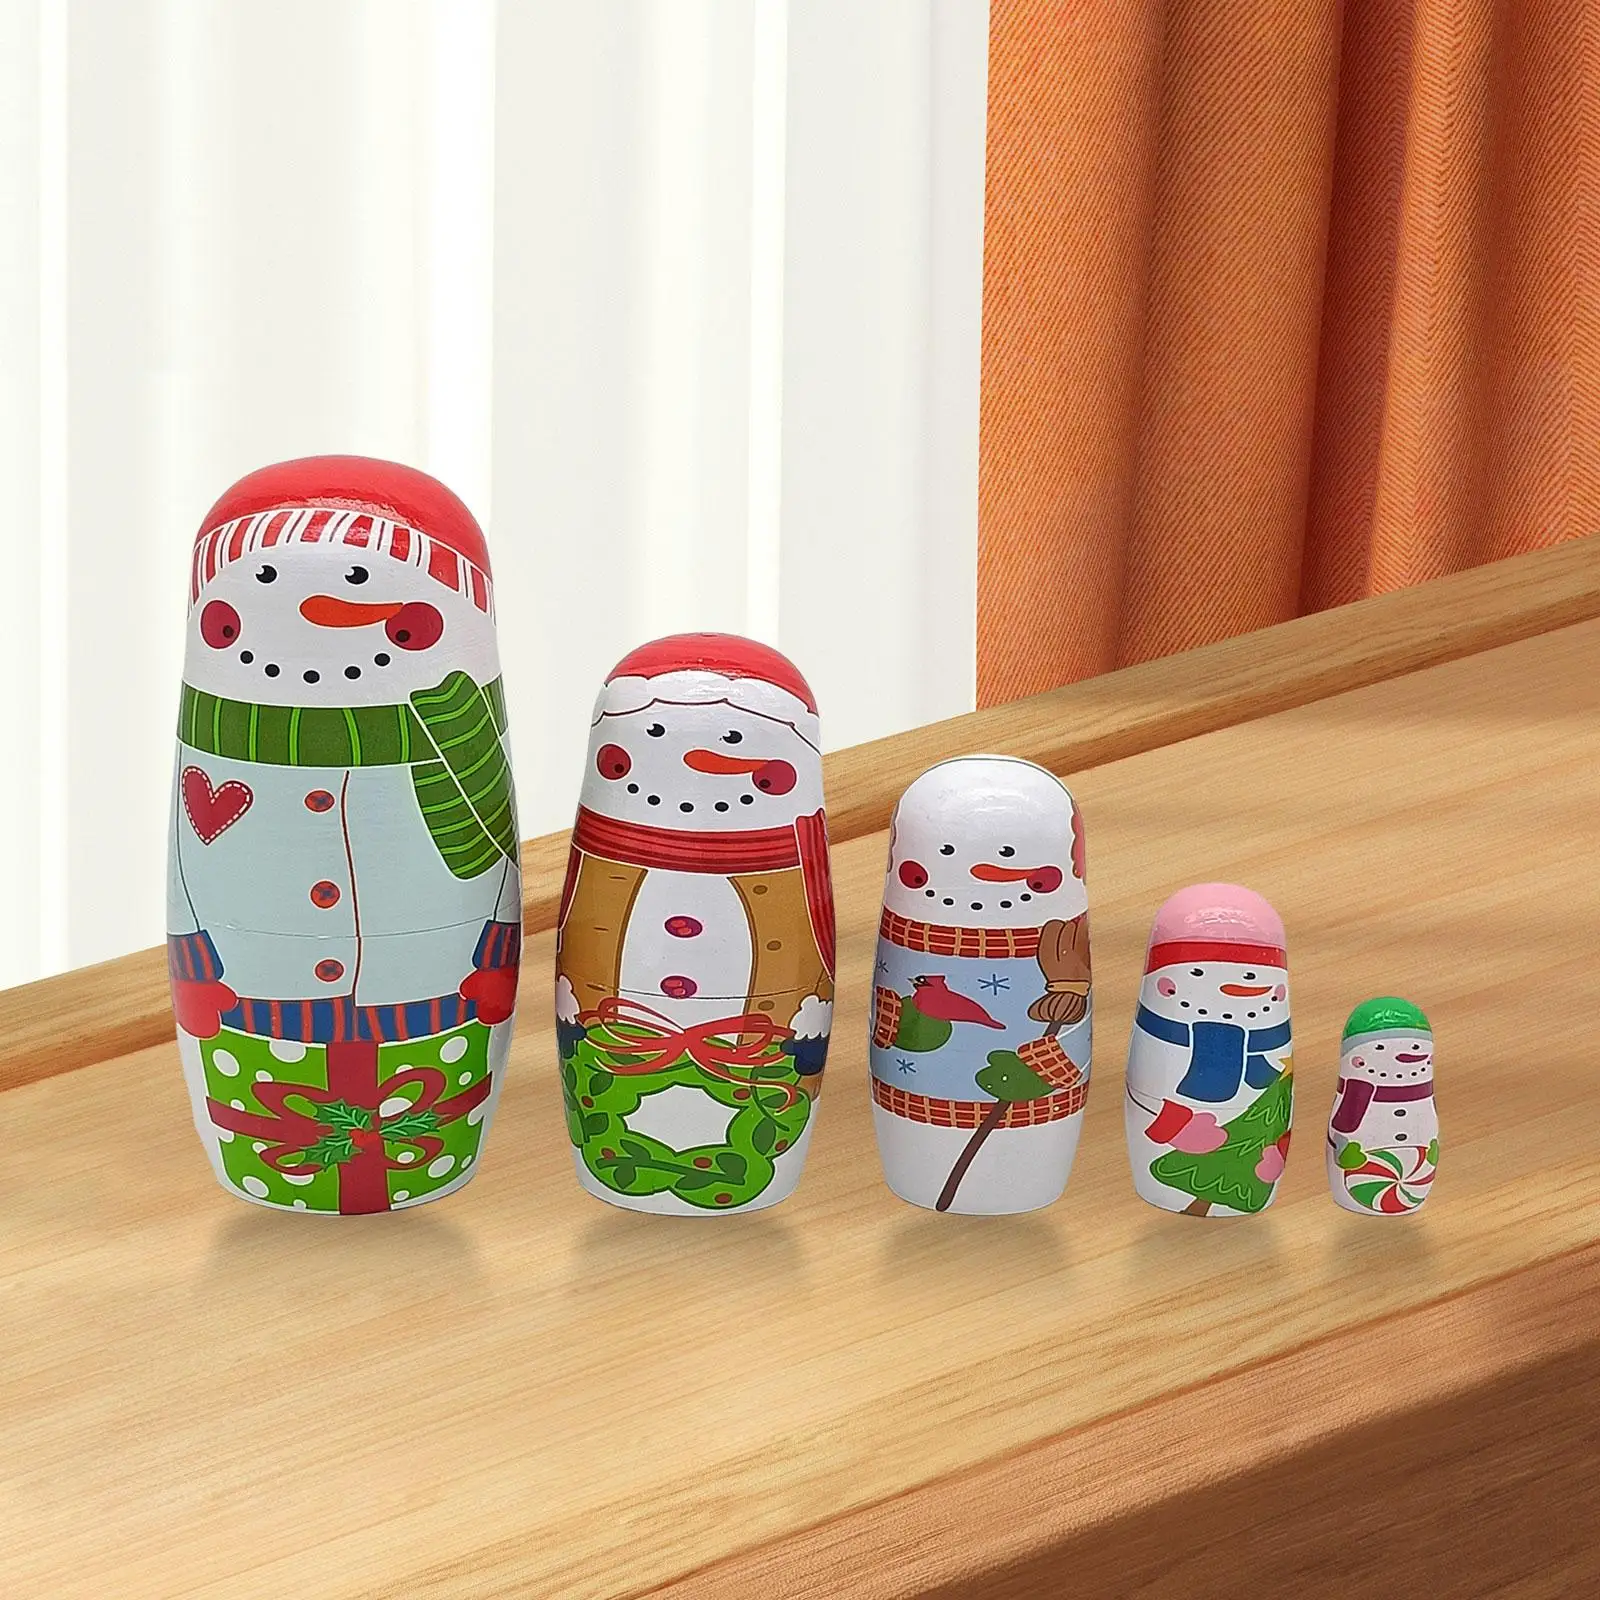 5 Pieces Holiday Santa Snowman Nesting Doll Matryoshka Dolls for Christmas